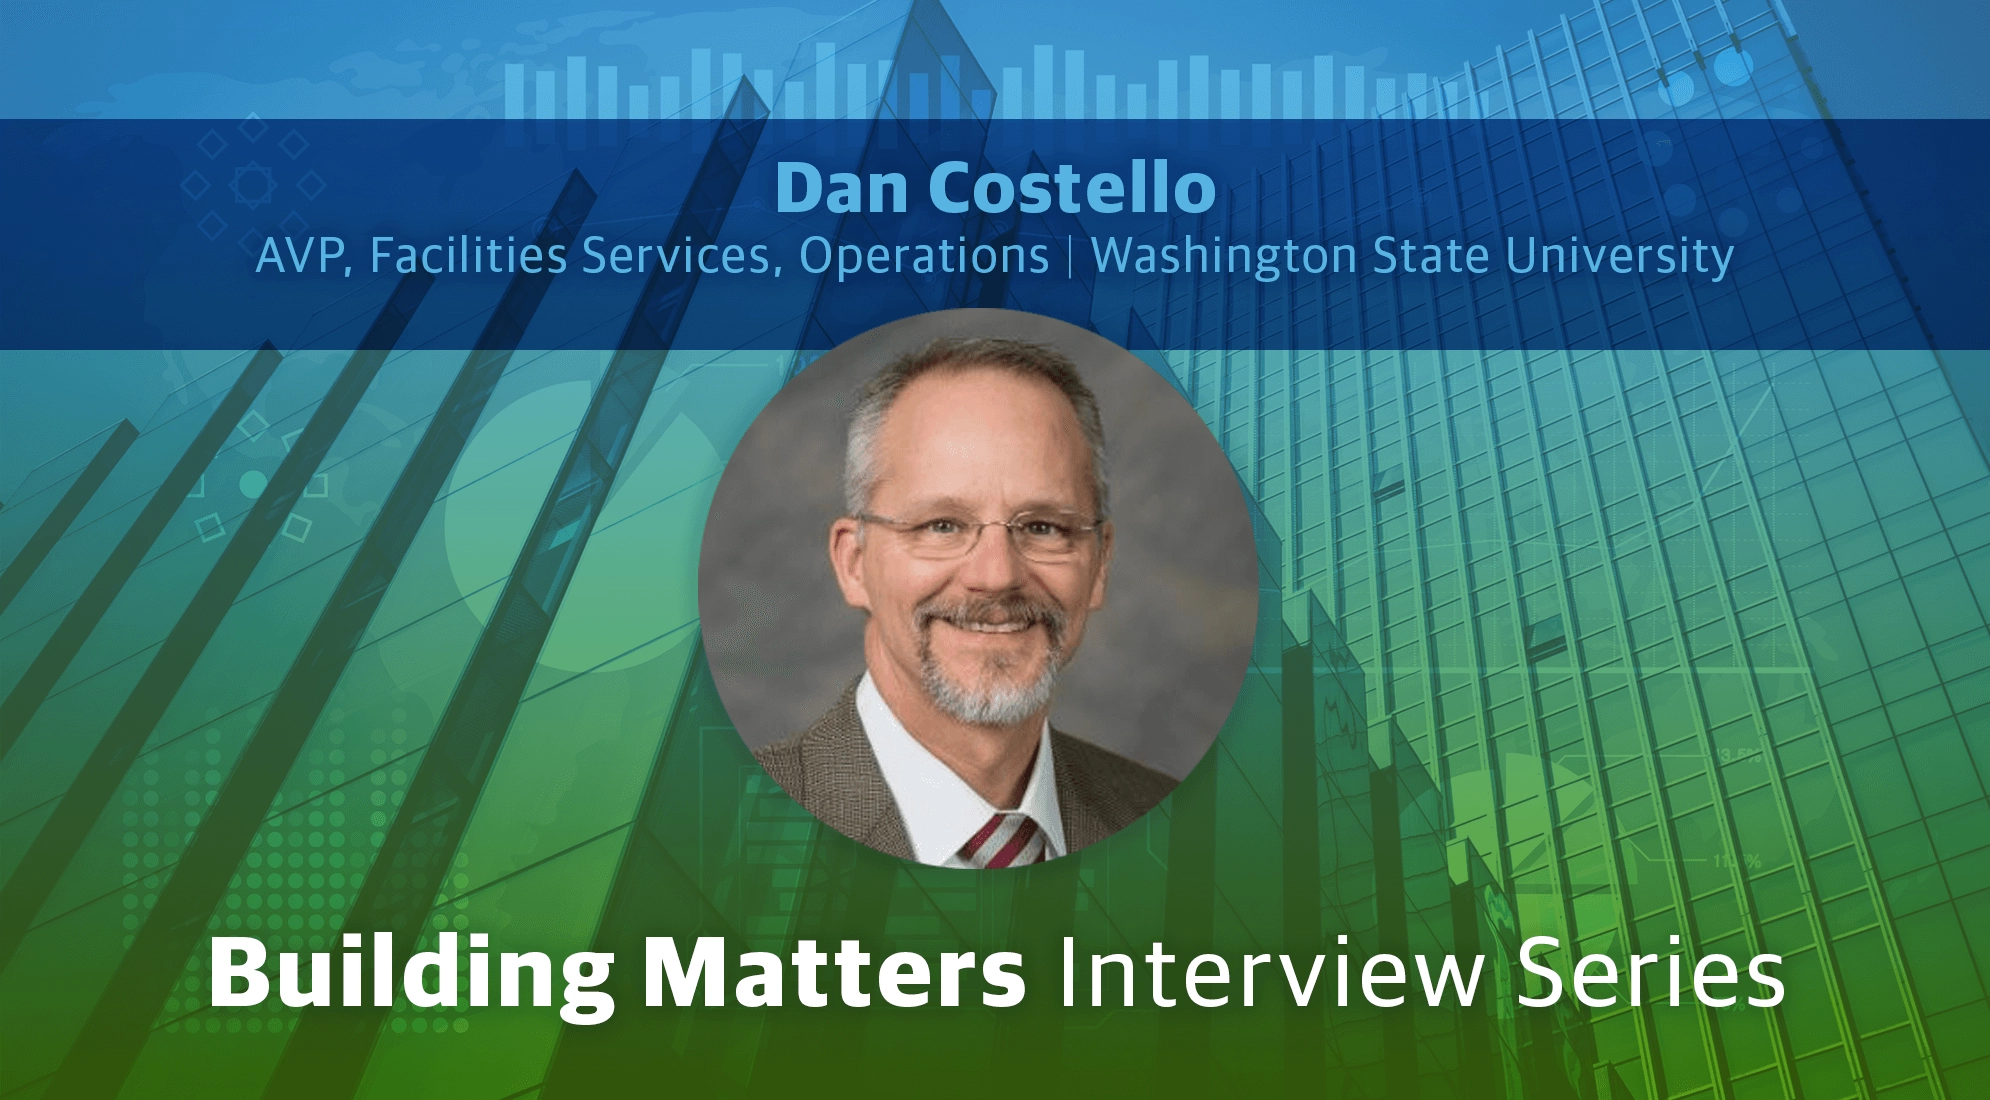 University Facilities Insights from Dan Costello 4